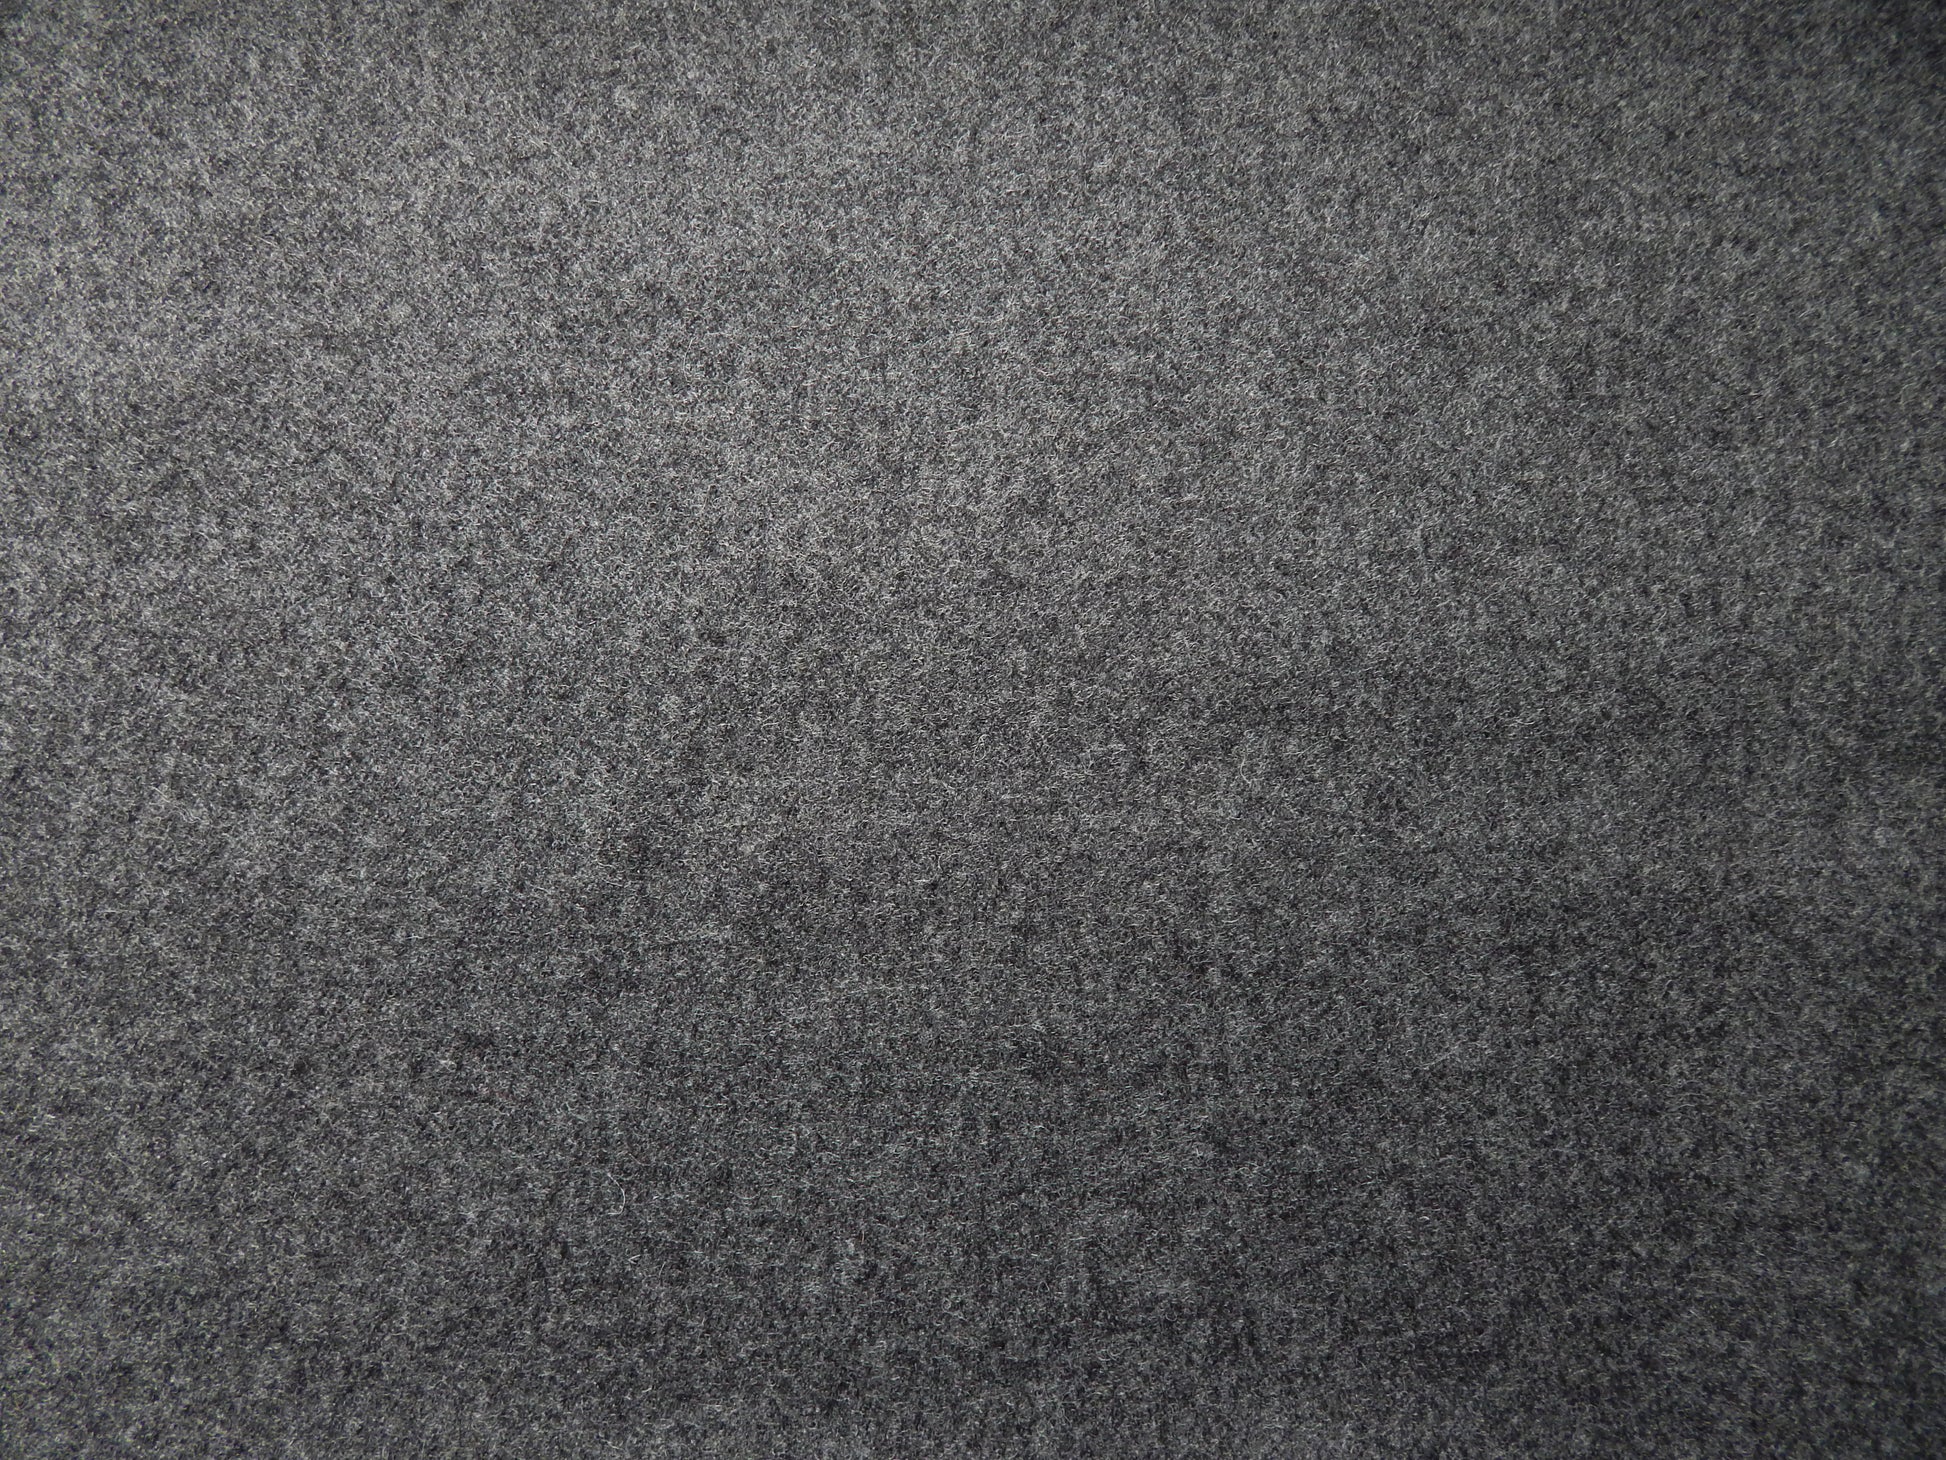 Charcoal grey wool fabric